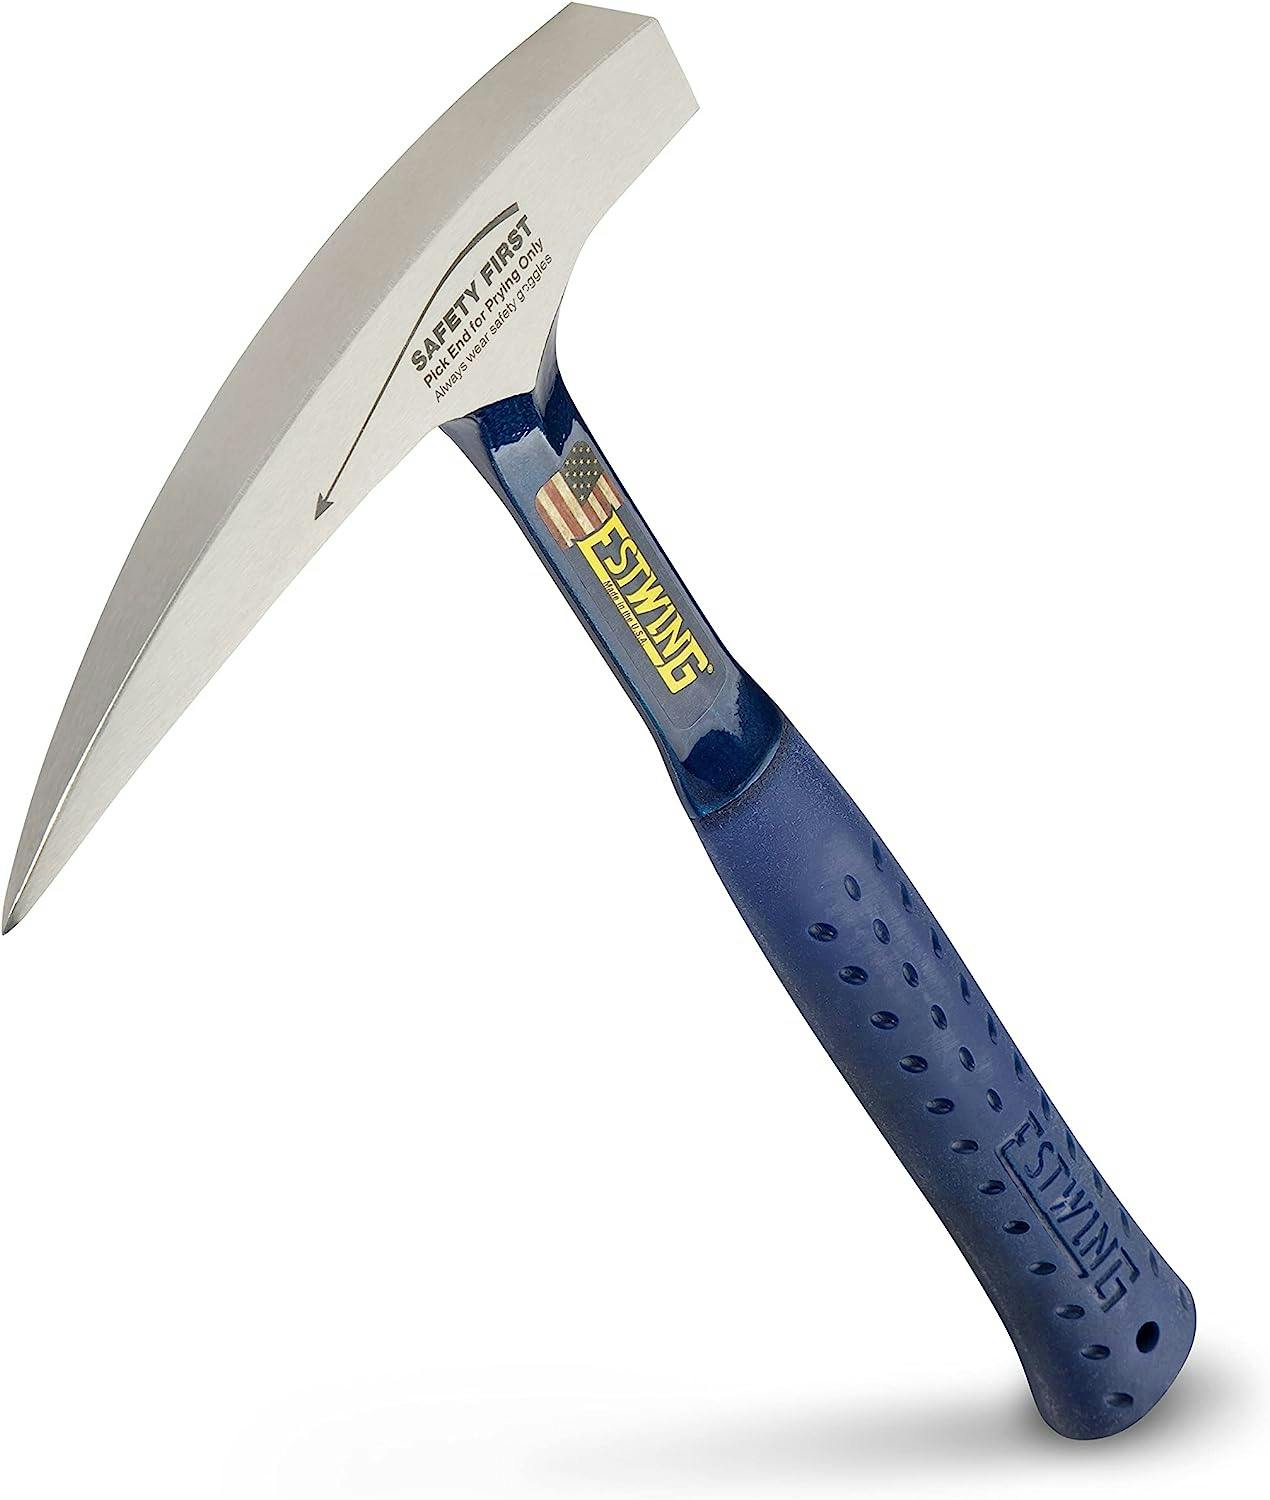 22 oz Steel Handle Non-Slip Grip Multicolor Pick Hammer